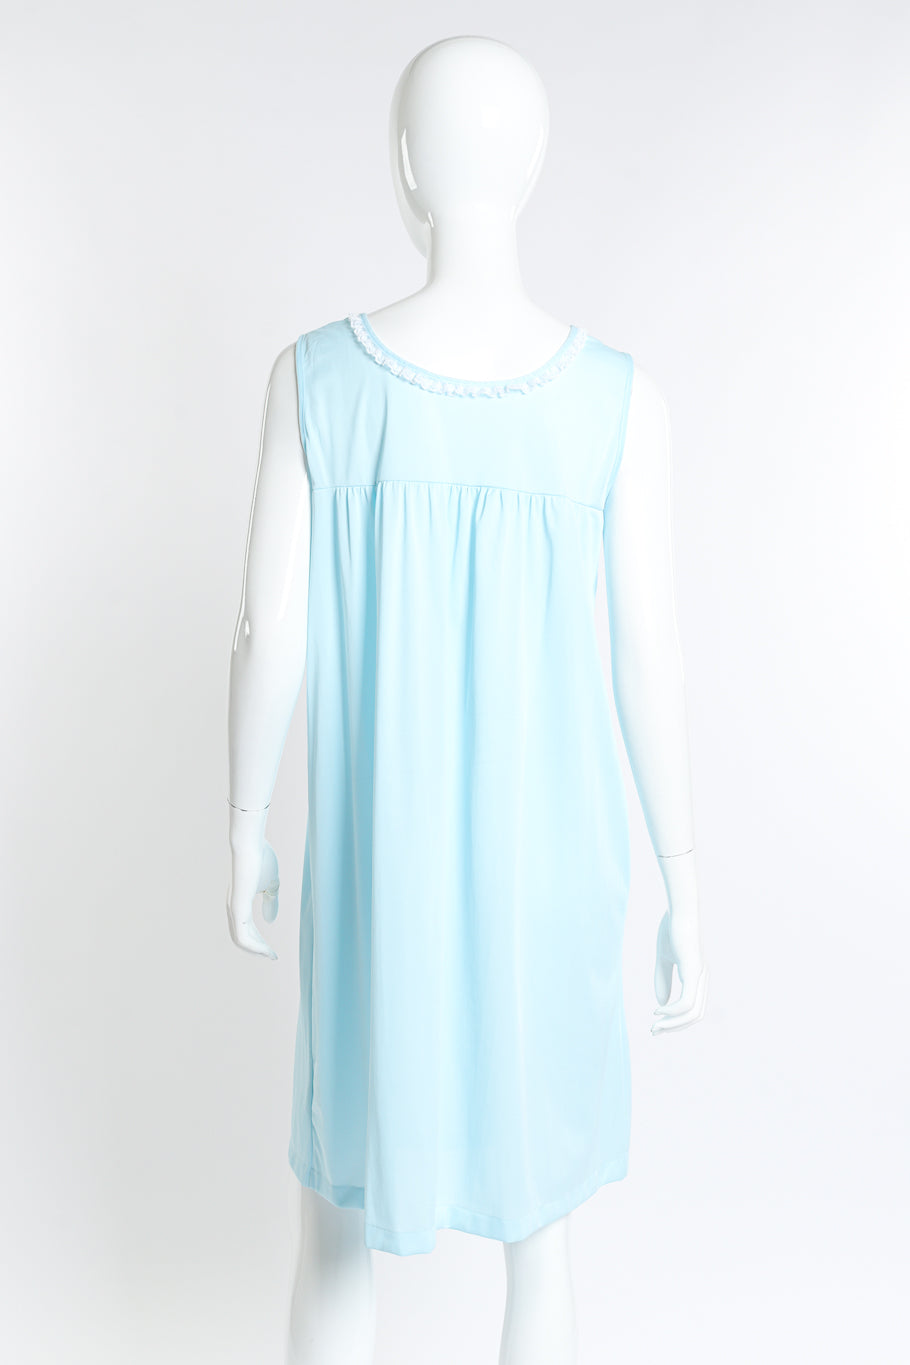 Vintage Sears Marabou Trim Robe & Chemise Set chemise back on mannequin @recess la